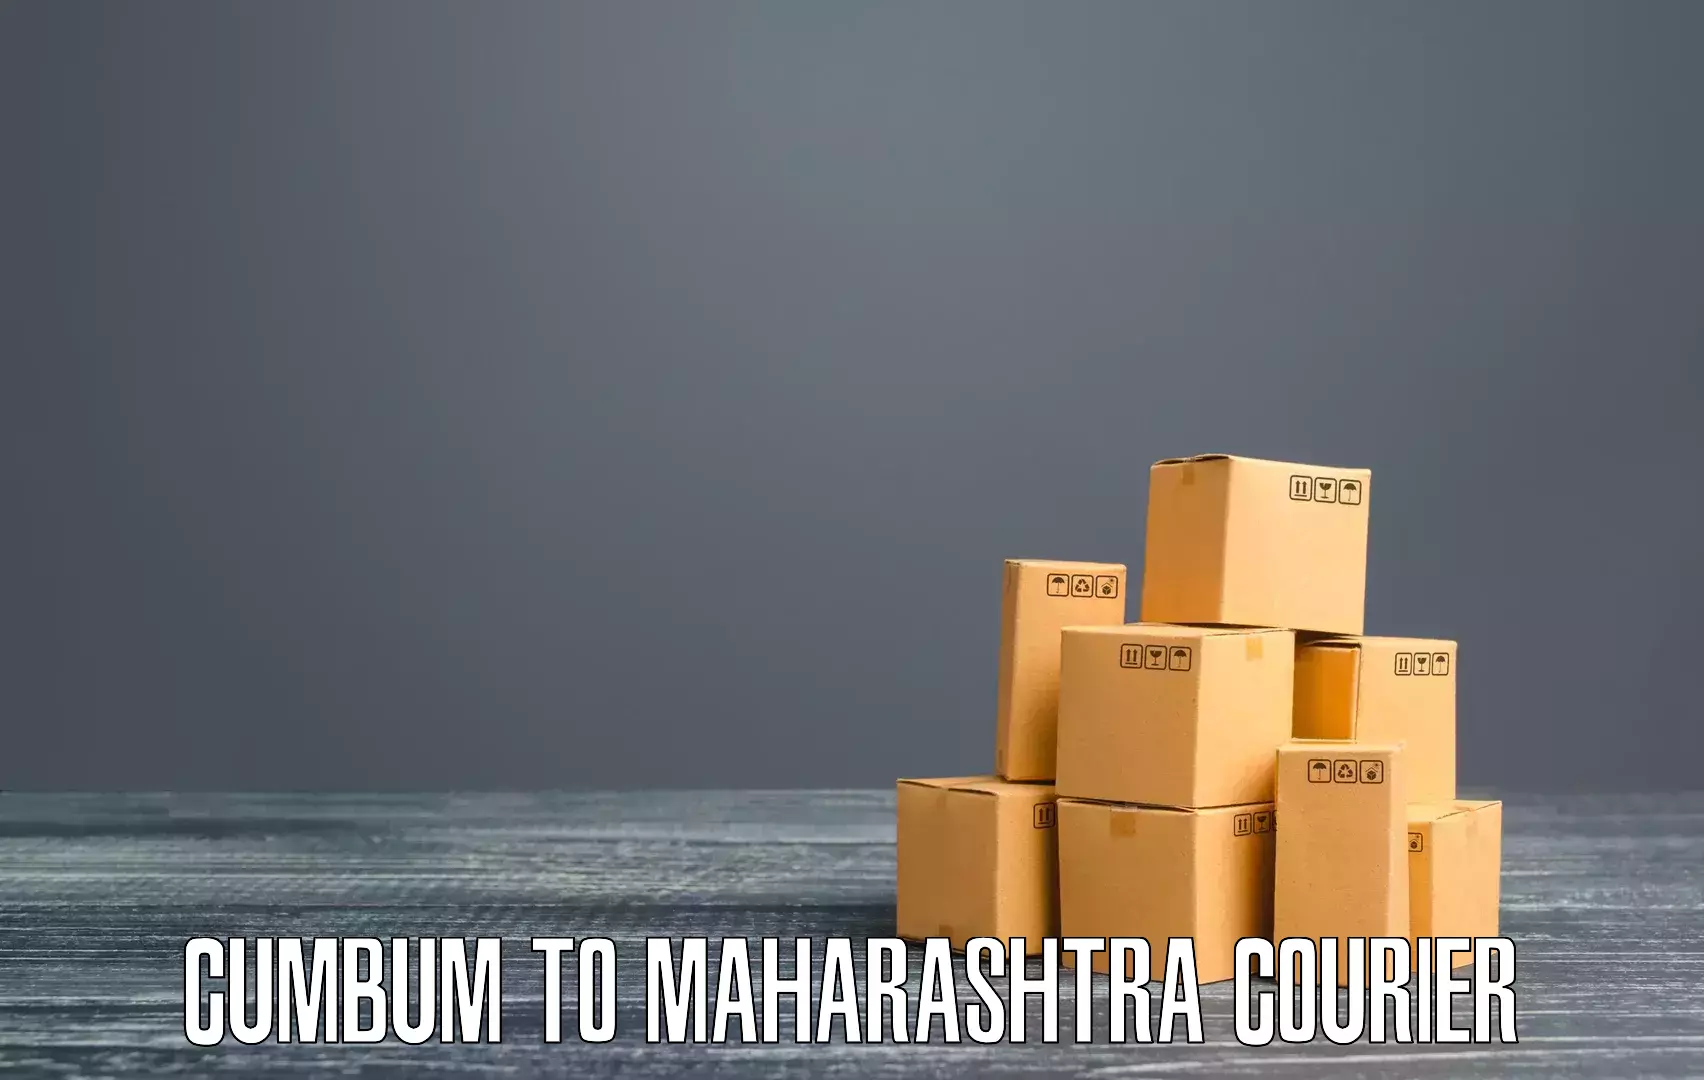 User-friendly delivery service Cumbum to Maharashtra